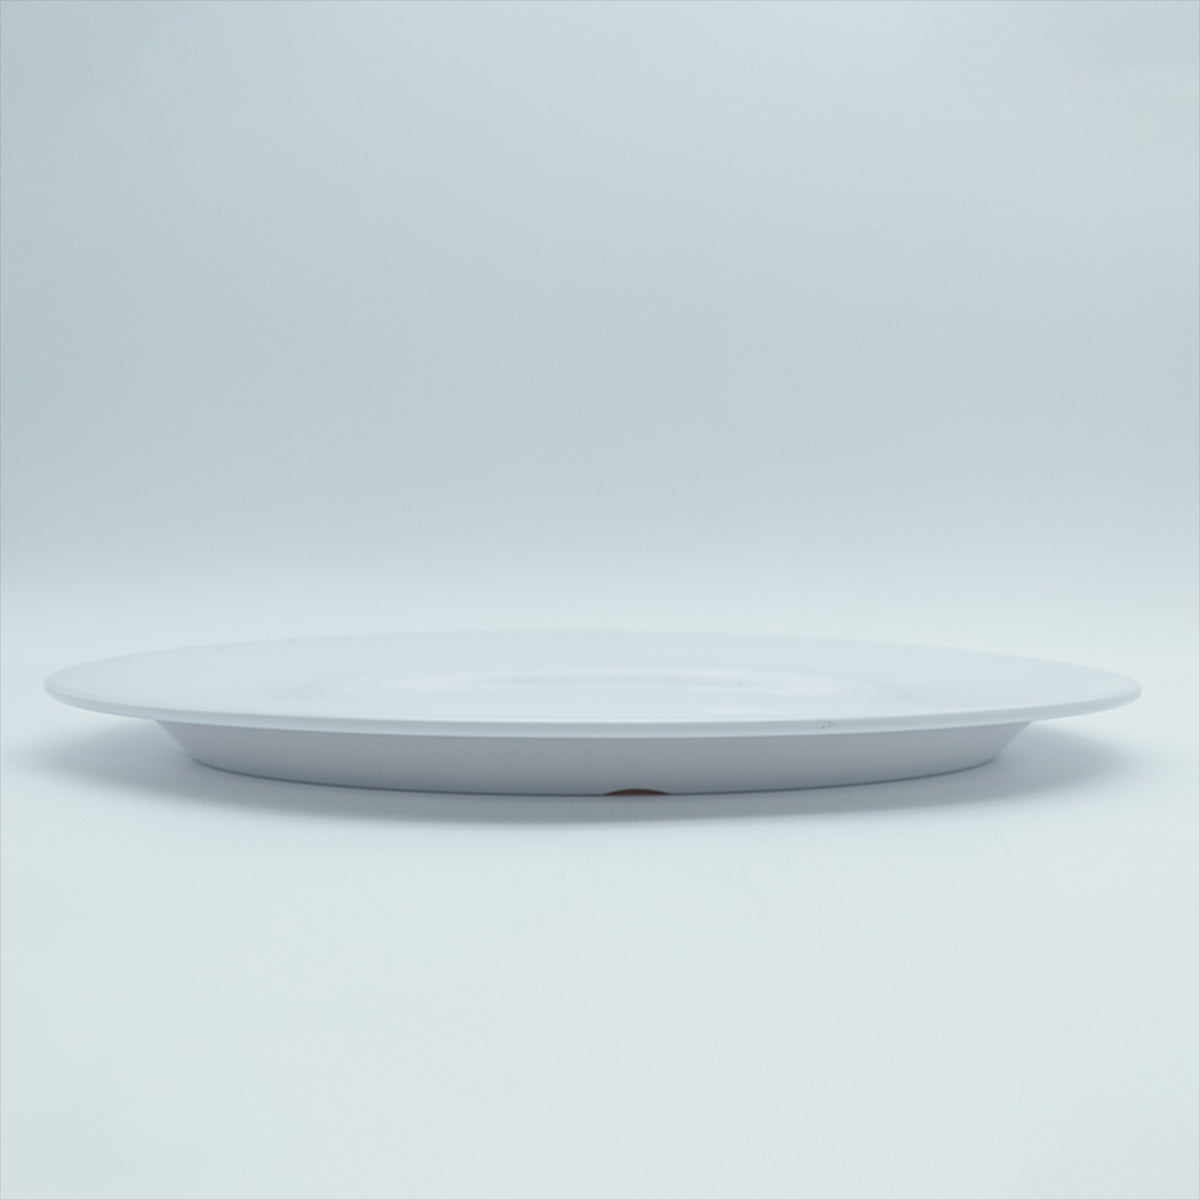 Plato Ovalado de 35.56 cm de Melamina Color Blanco